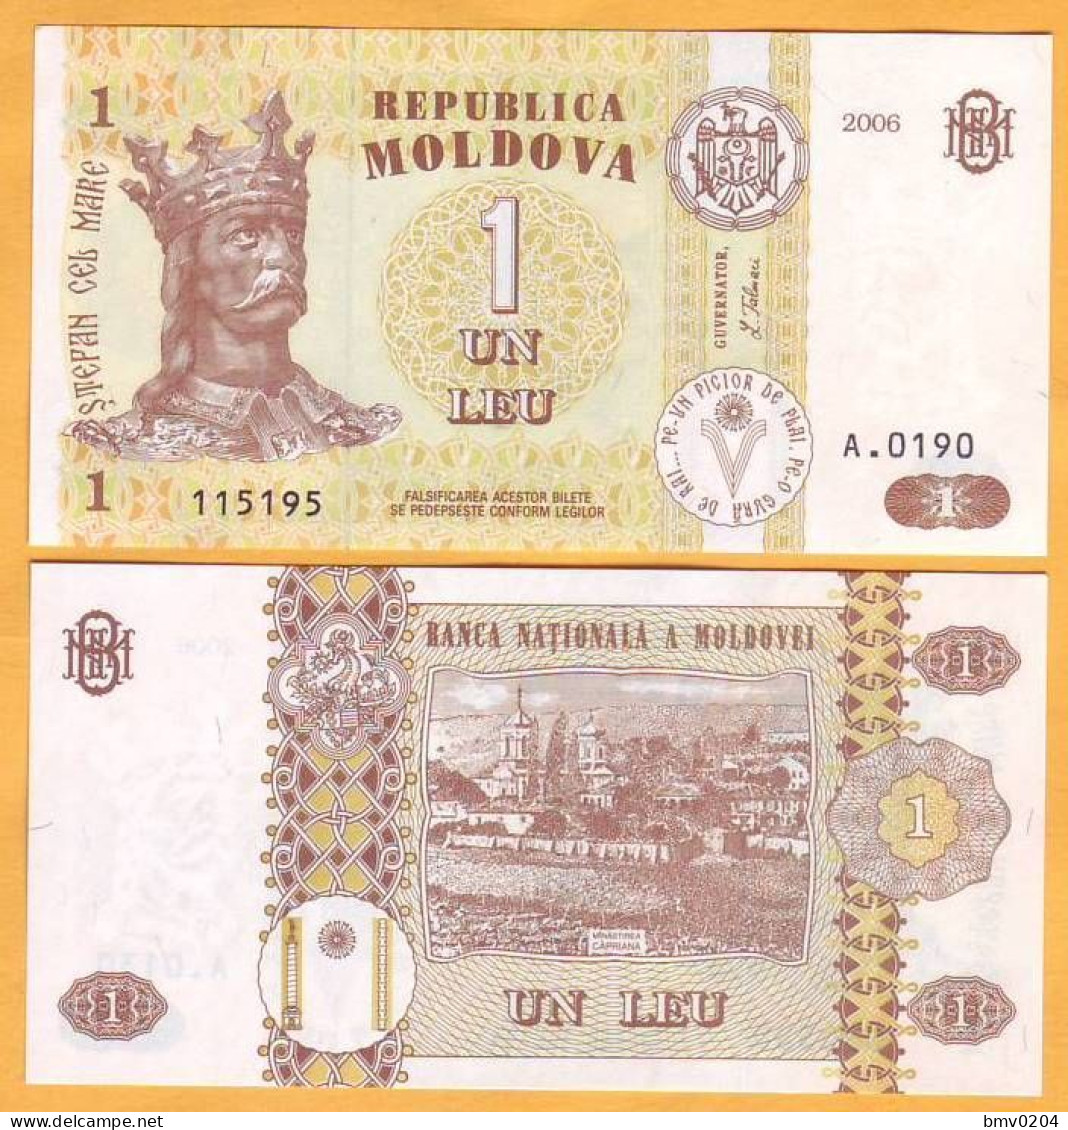 Moldova Moldavie  5 Banknotes  "1 LEI  2006", UNC  One Set Of 5 1 Leu Banknotes. - Moldavie